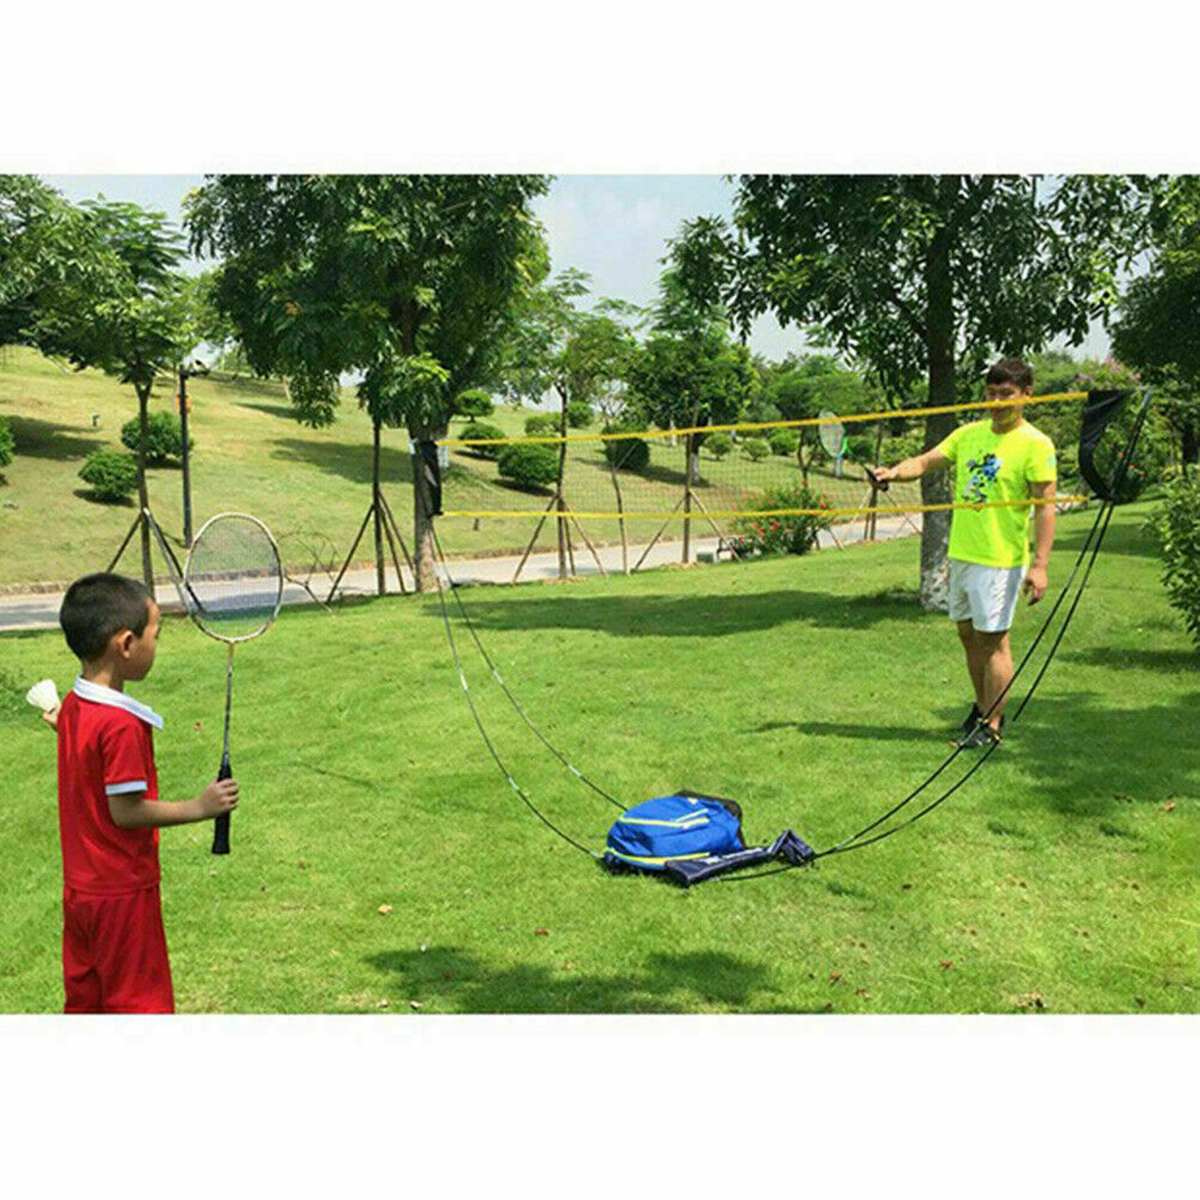 300x150CM-Standard-Outdoor-Badminton-Tennis-Net-Replacement-Badminton-Net-Professional-Training-Spor-1724984-10